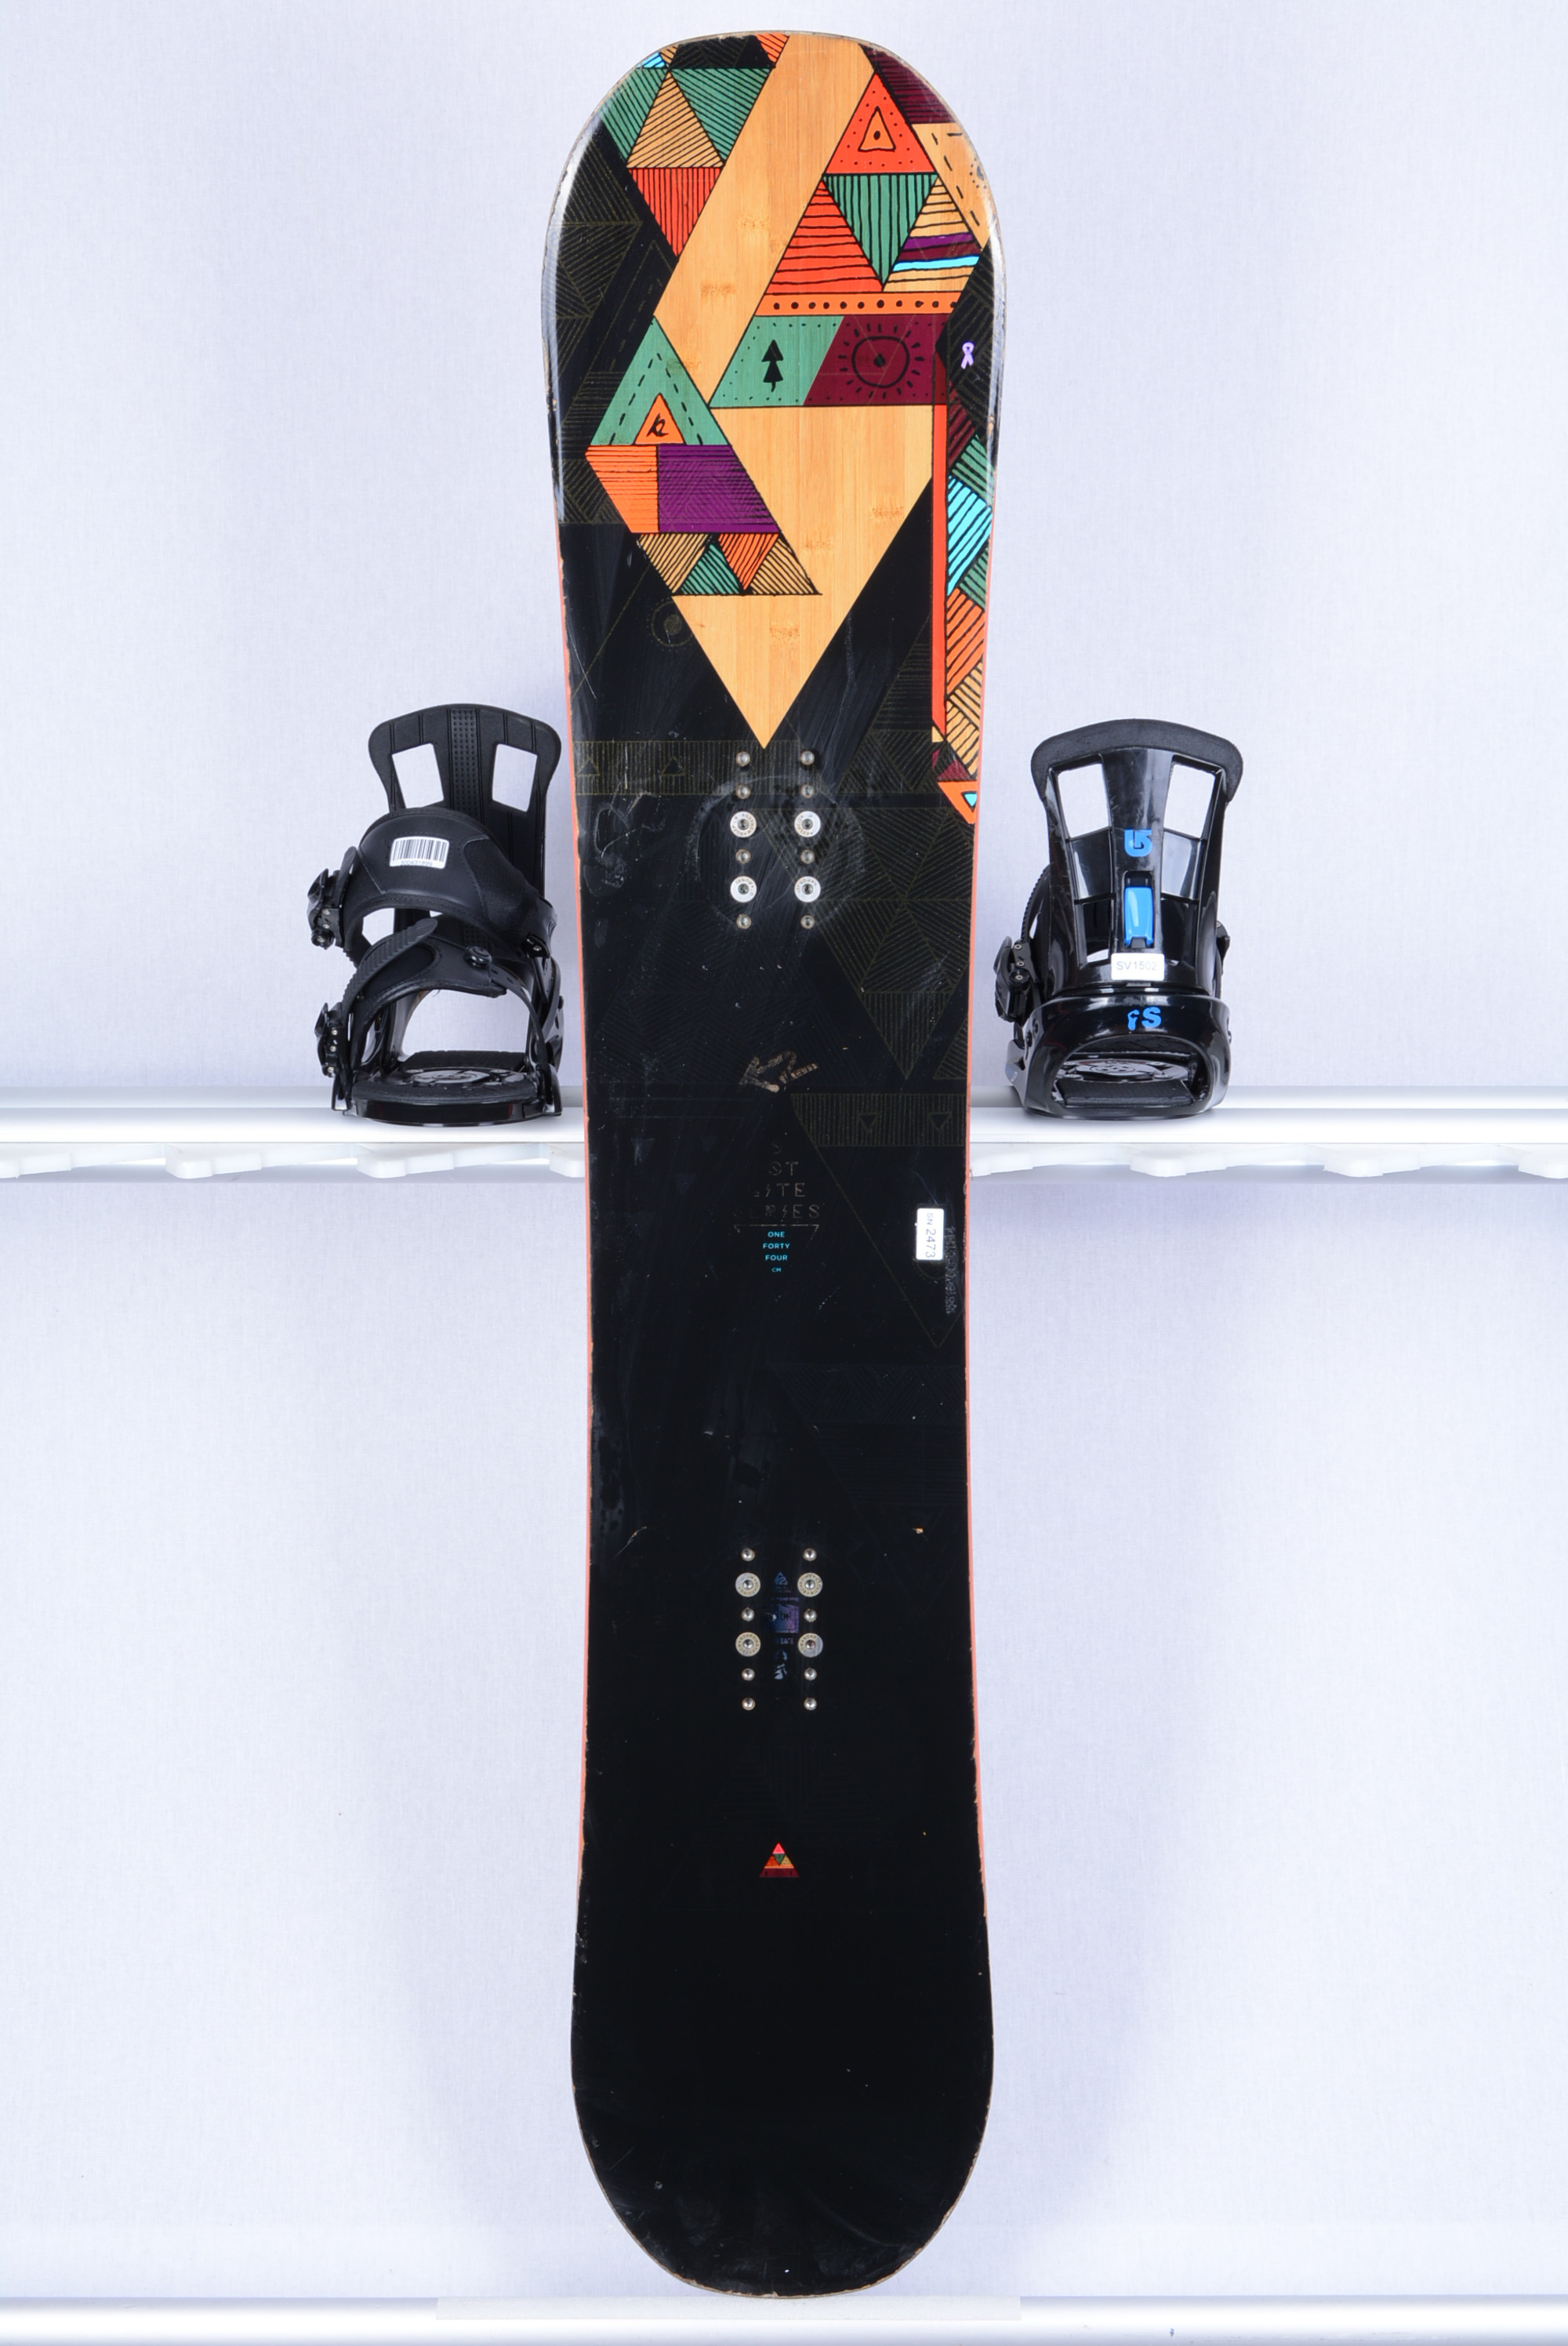 tavola snowboard donna K2 SPOT LITE SERIES, CAMBER, directional twin,  rhythm core 